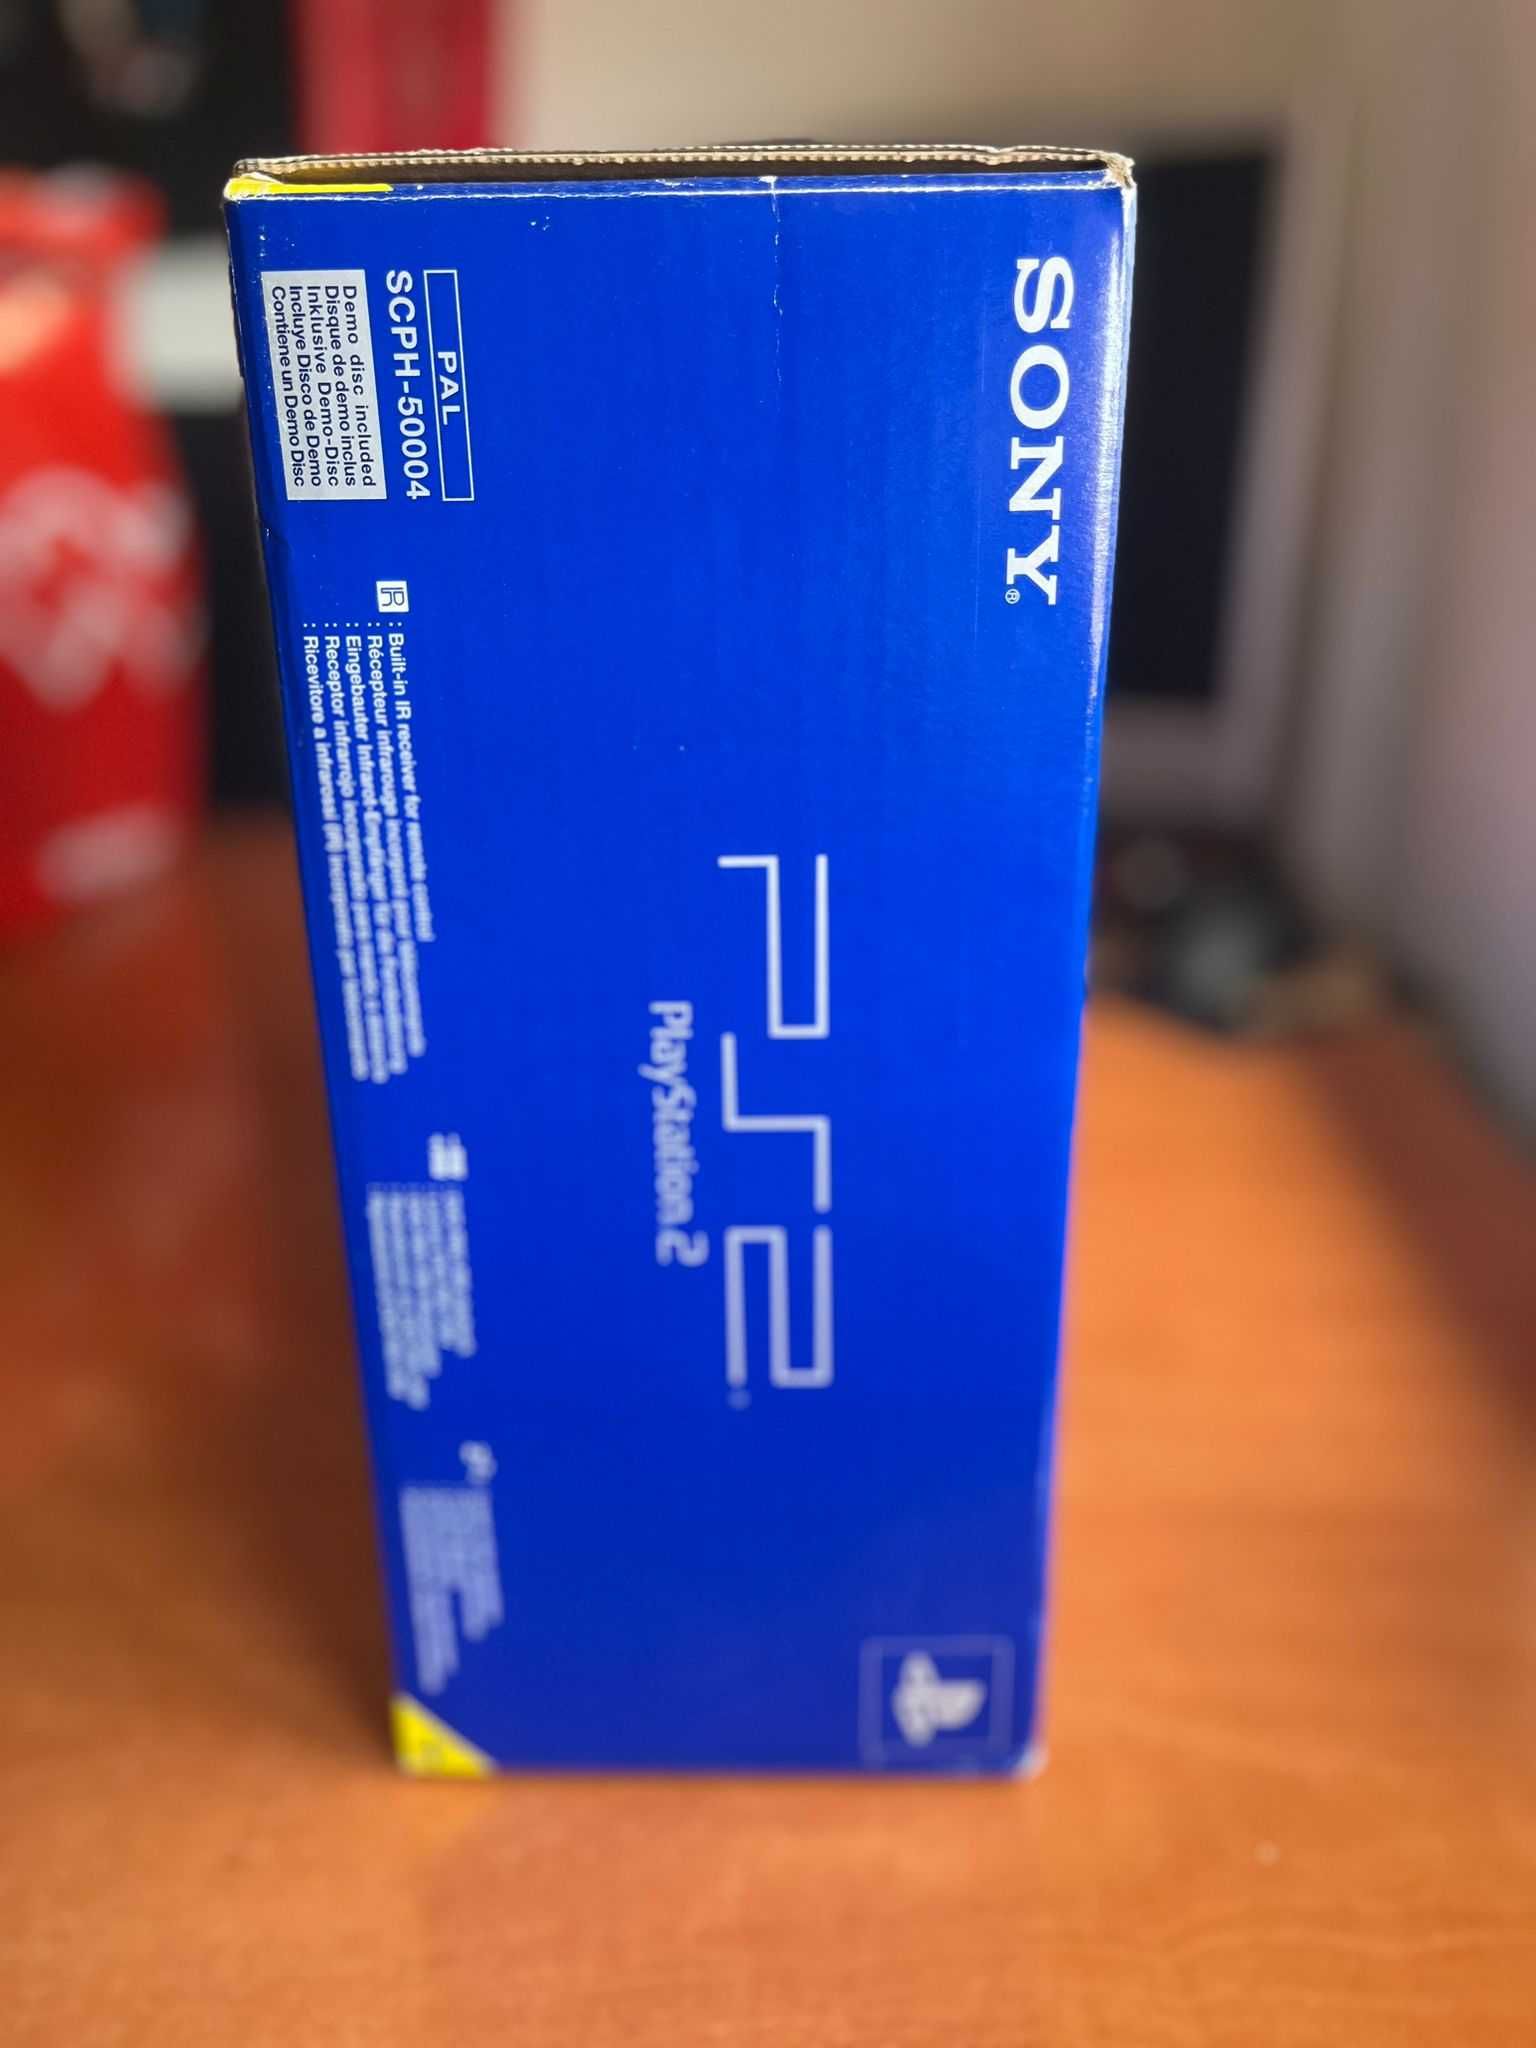 Caixa Sony Playstation 2 - Azul (somente caixa) SCPH-50004